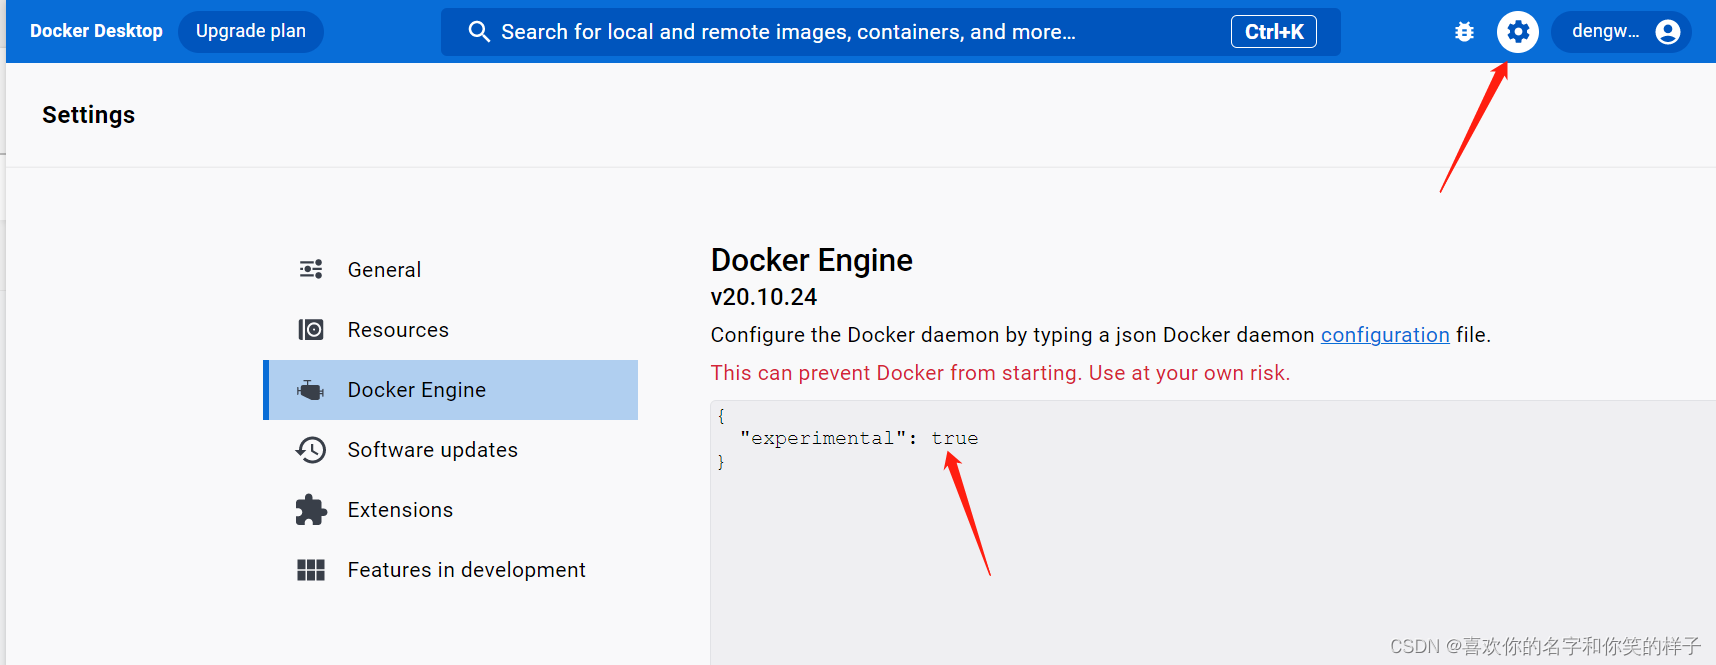 Docker Desktop使用PostgreSql配合PGAdmin的使用